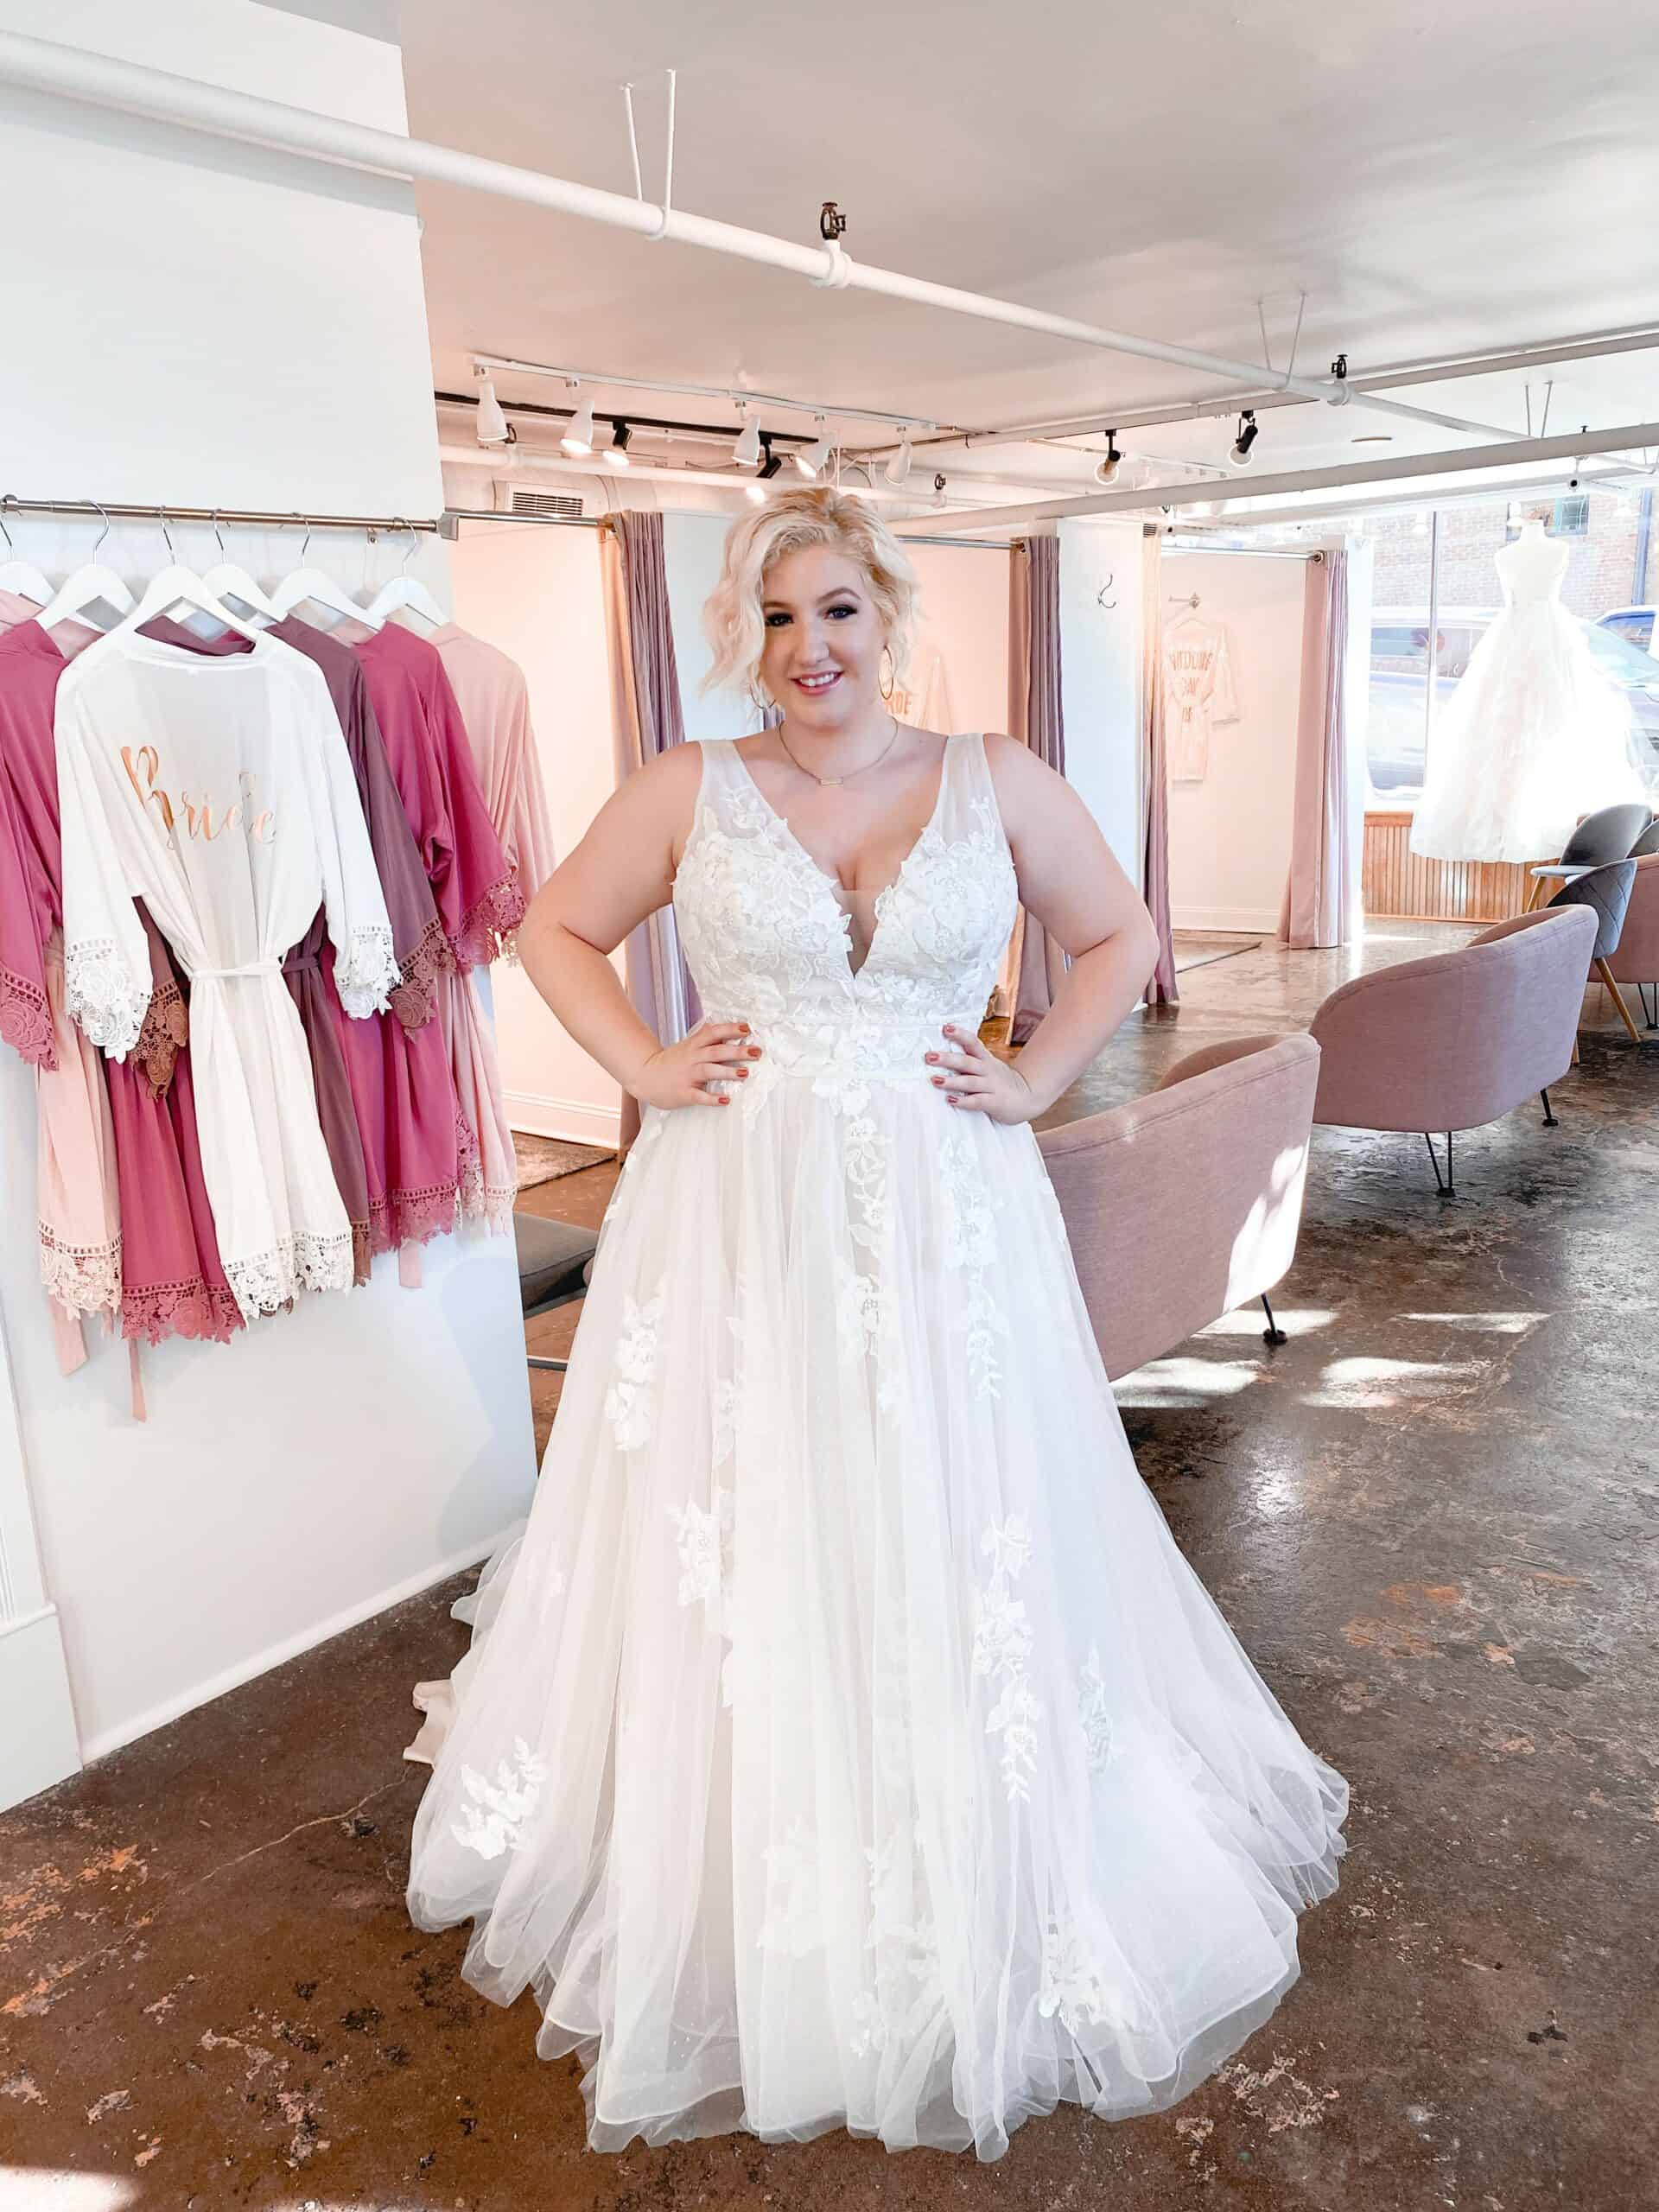 Plus-Size Wedding Dress Shopping Tips ...